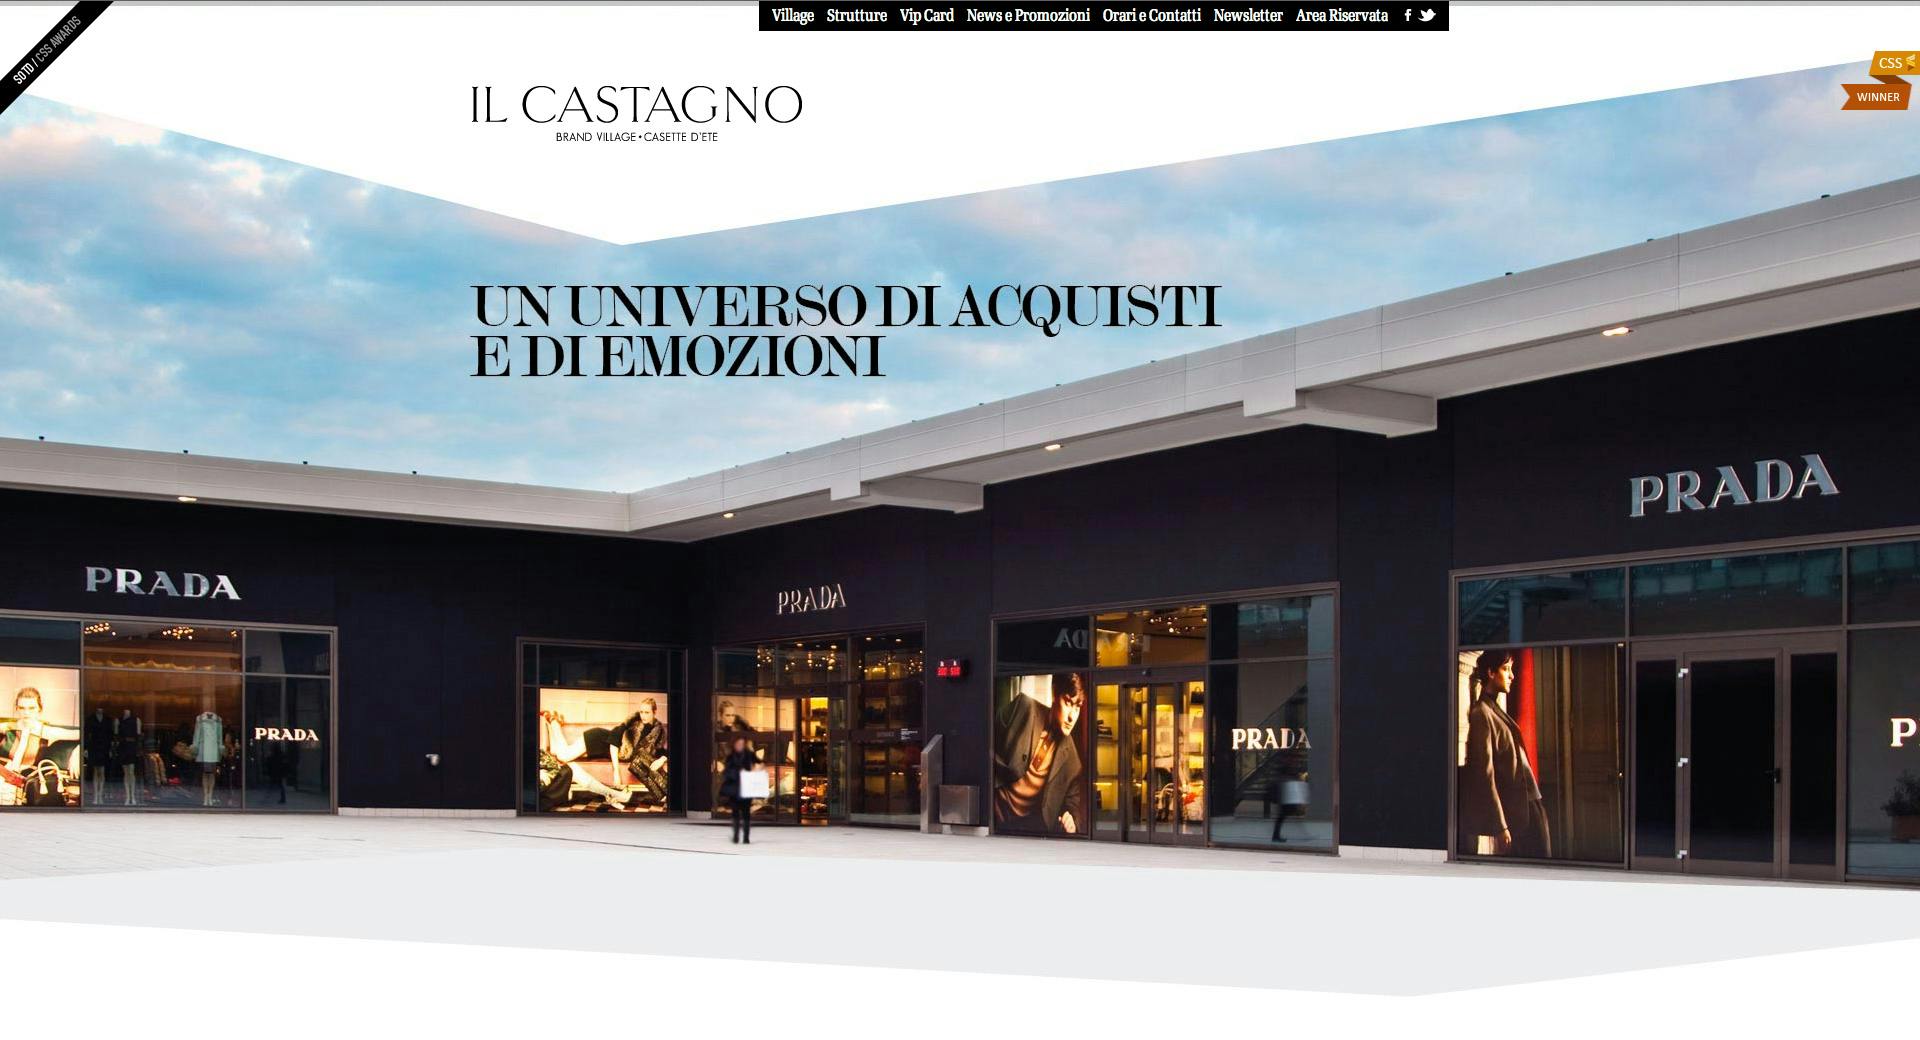 IL CASTAGNO Brand Village Website Screenshot